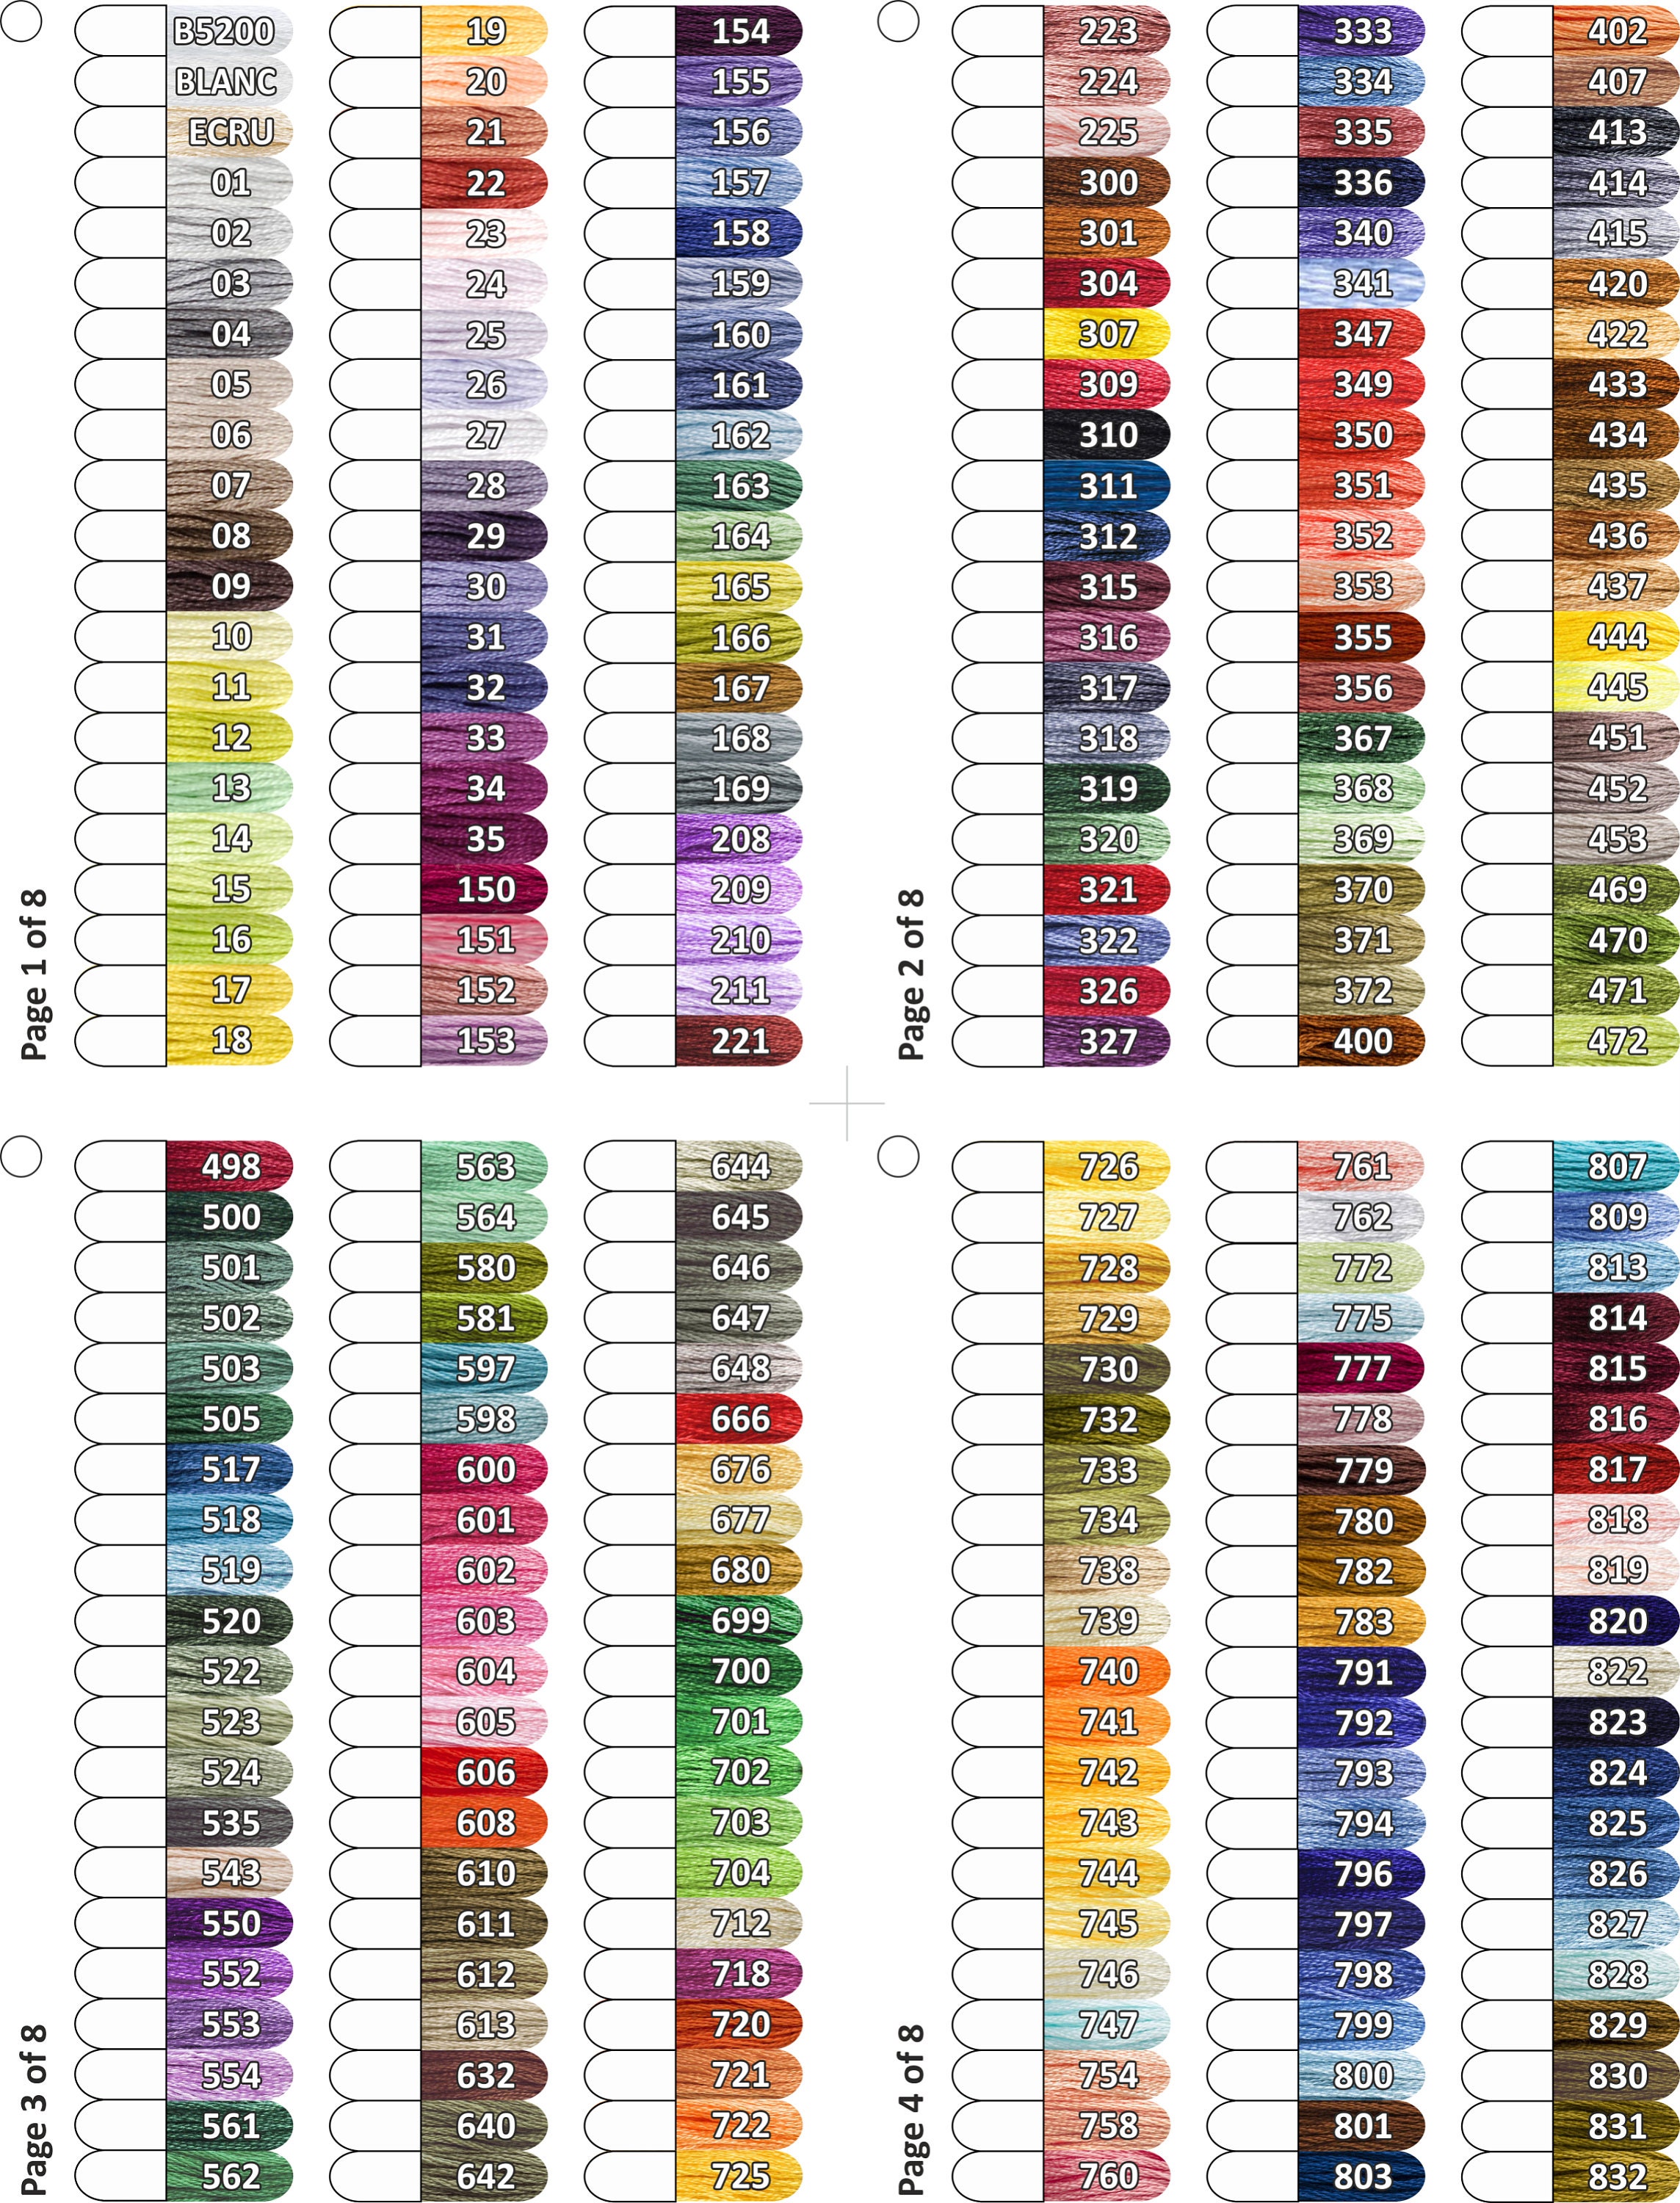 DMC Color Chart Floss Inventory Tracker digital PDF 